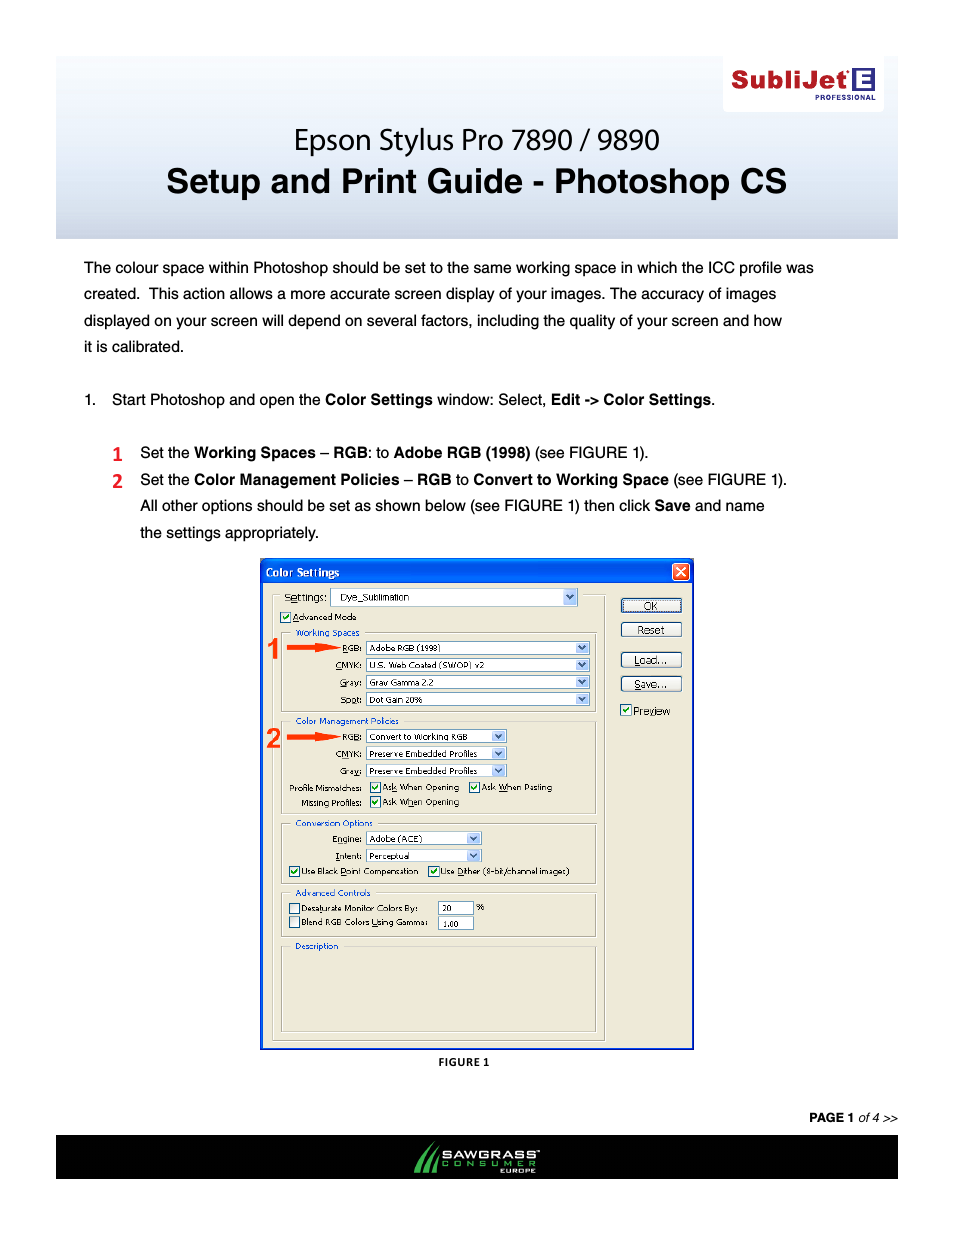 SubliJet E Epson Stylus Pro 9890 (Windows ICC Profile Setup): Print & Setup Guide Photoshop CS